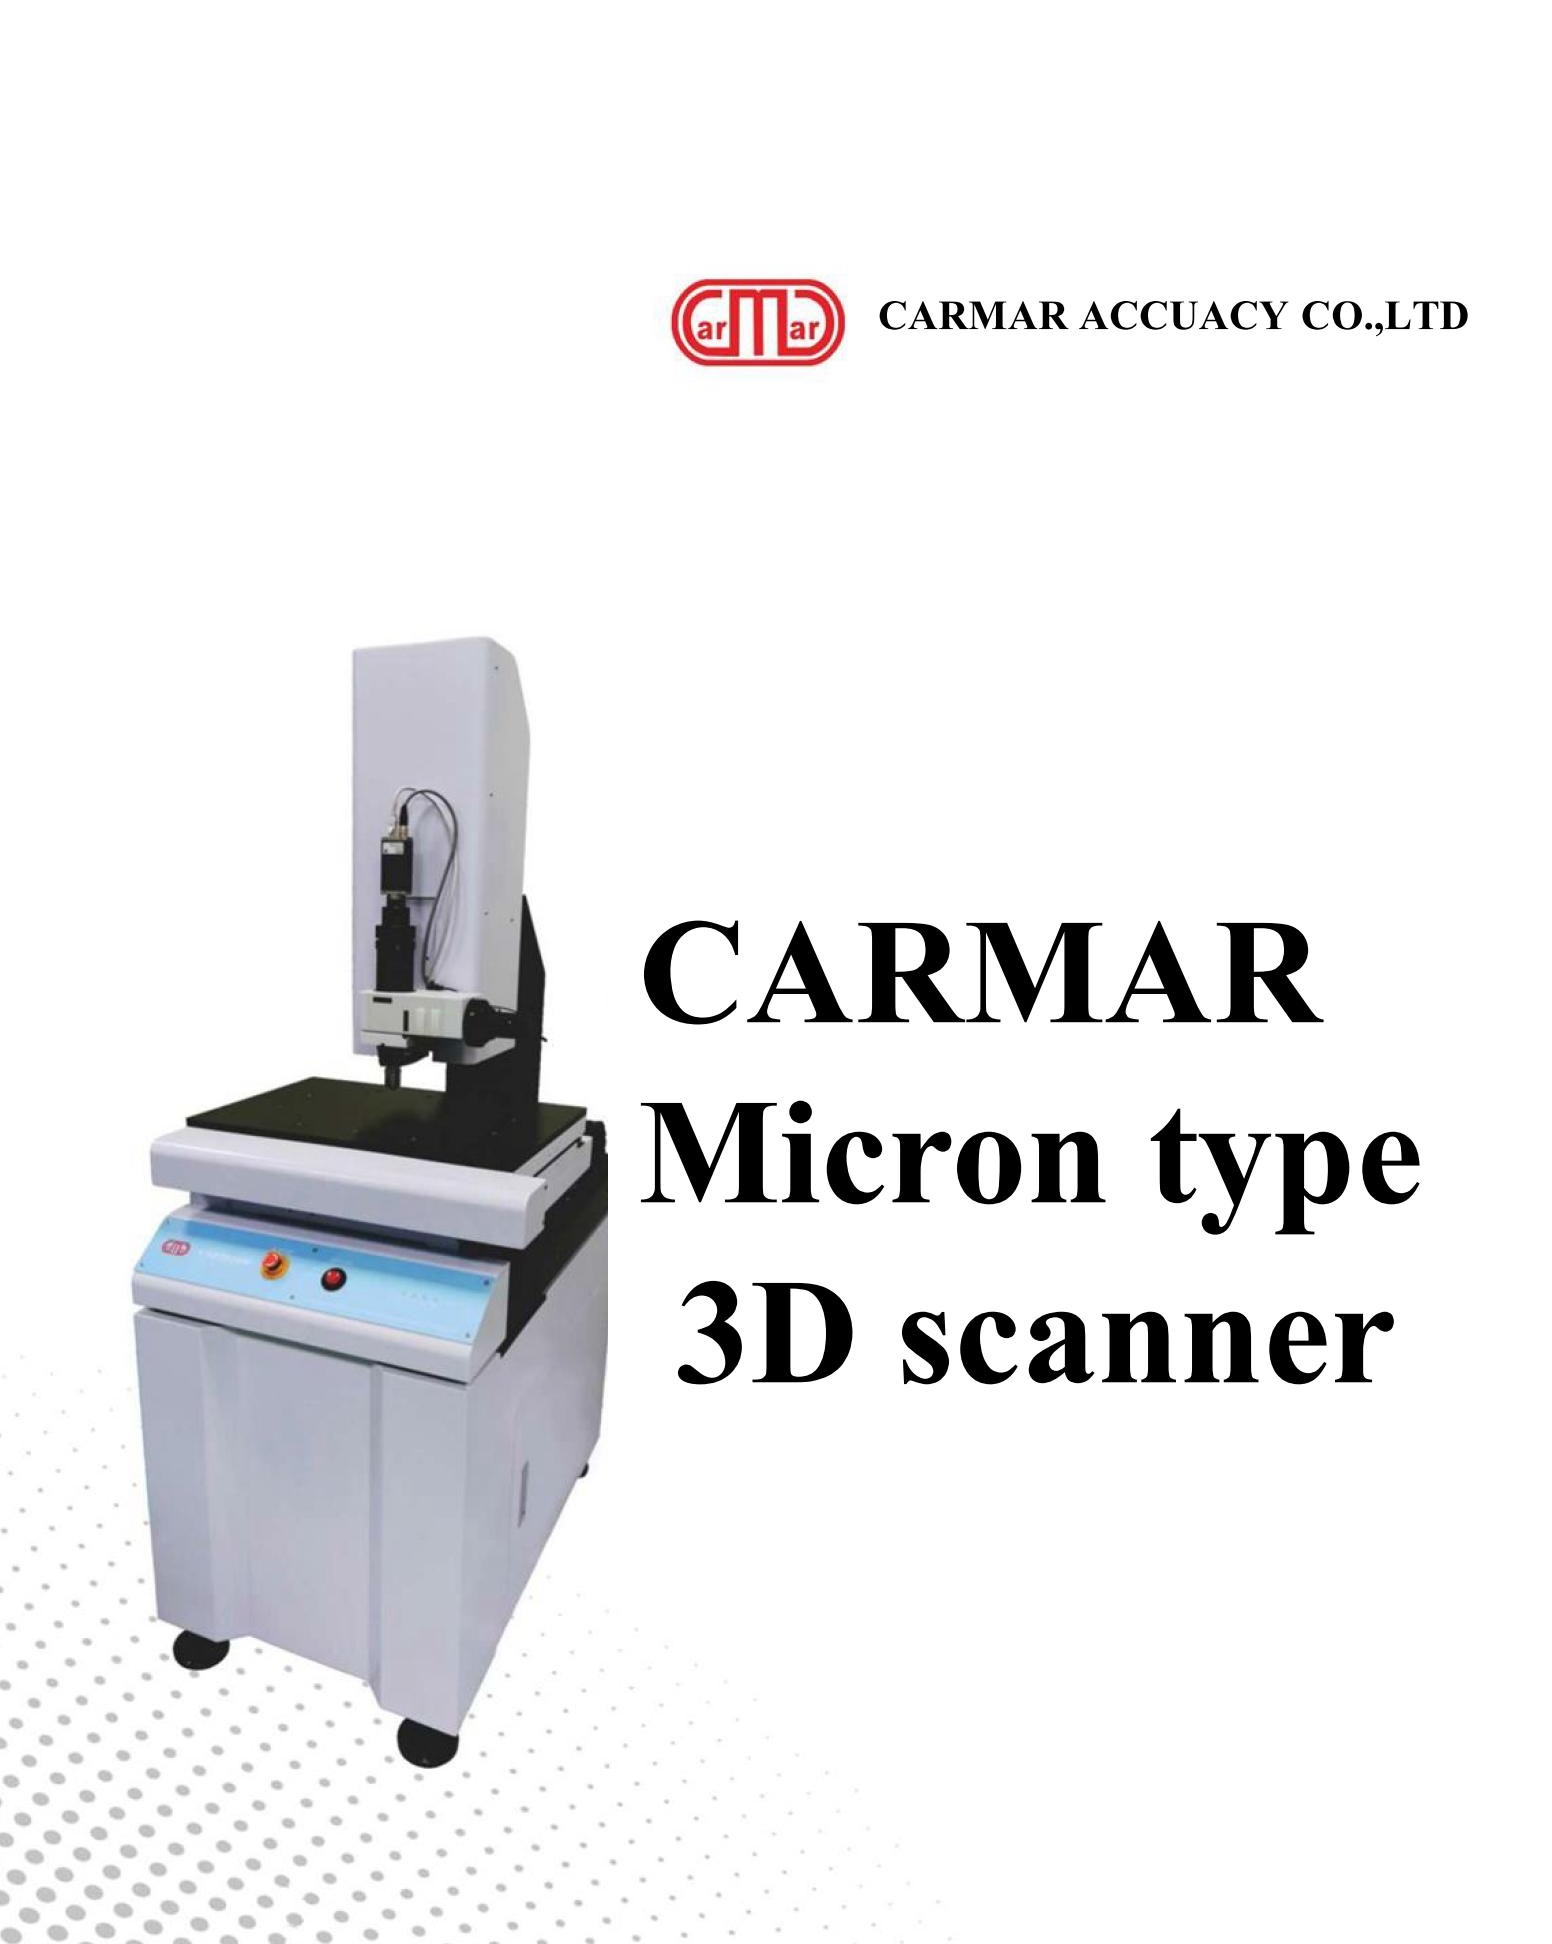 CARMAR Micron type 3D scanner